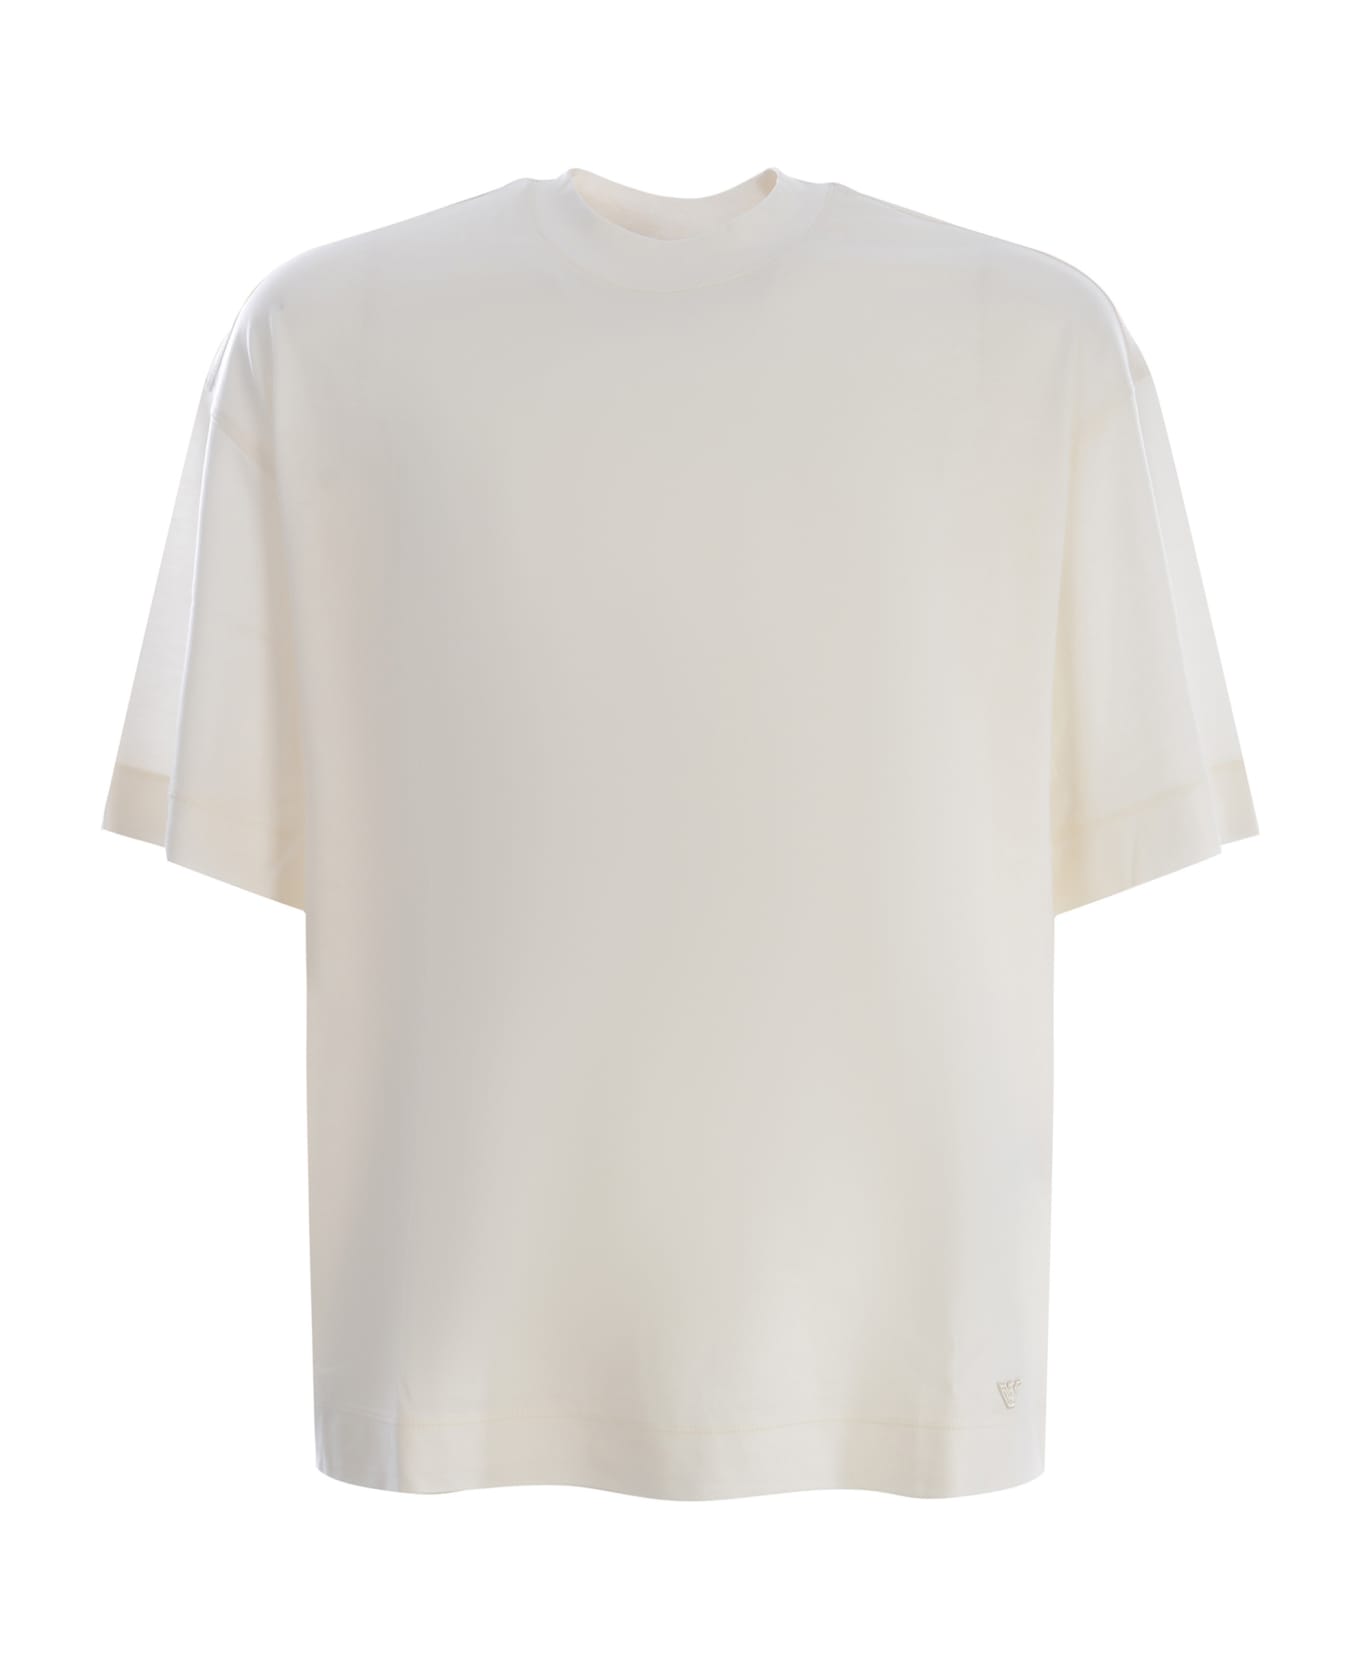 Emporio Armani T-shirt Emporio Armani Made Of Cotton - Crema シャツ